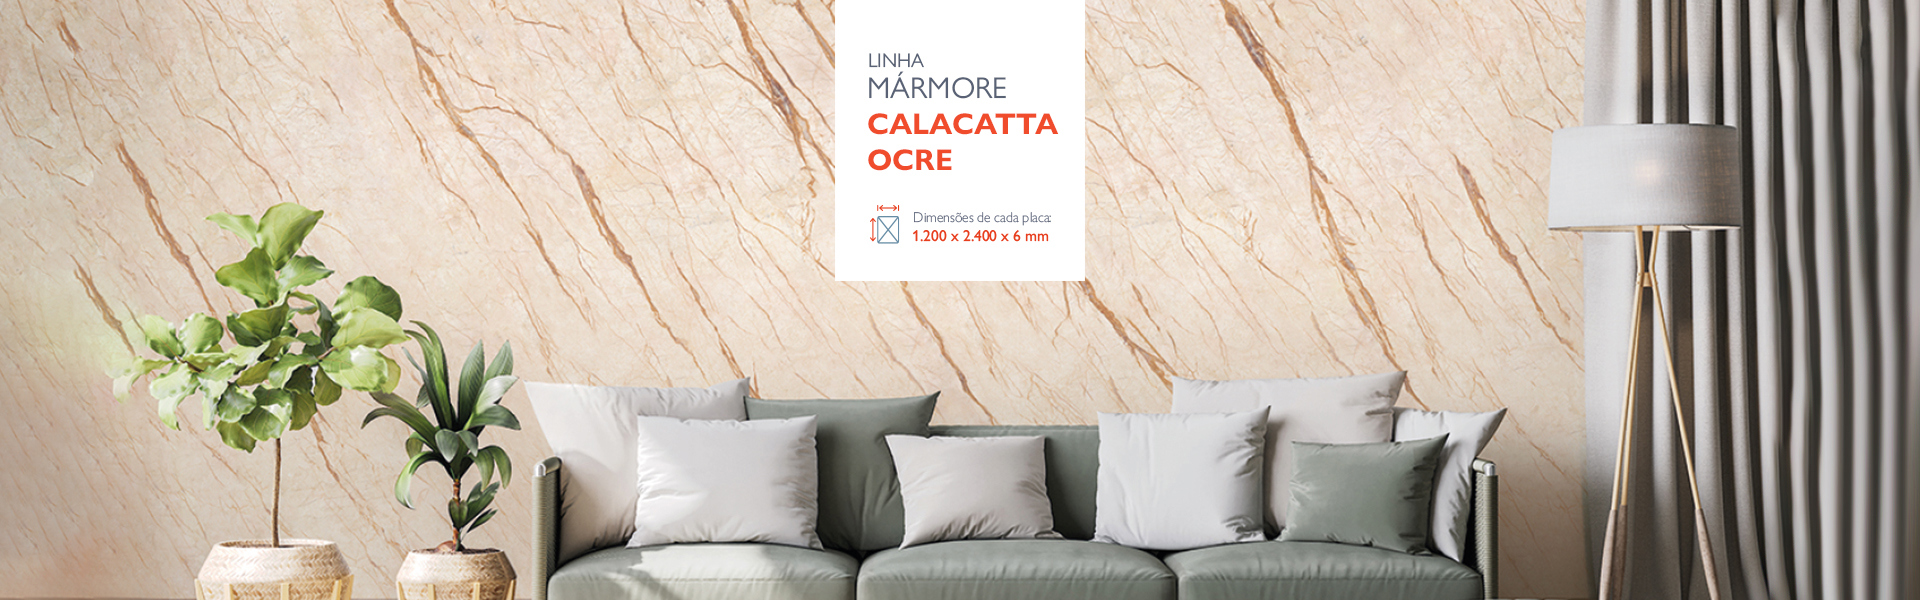 banner-Marmore-Calacatta-Ocre